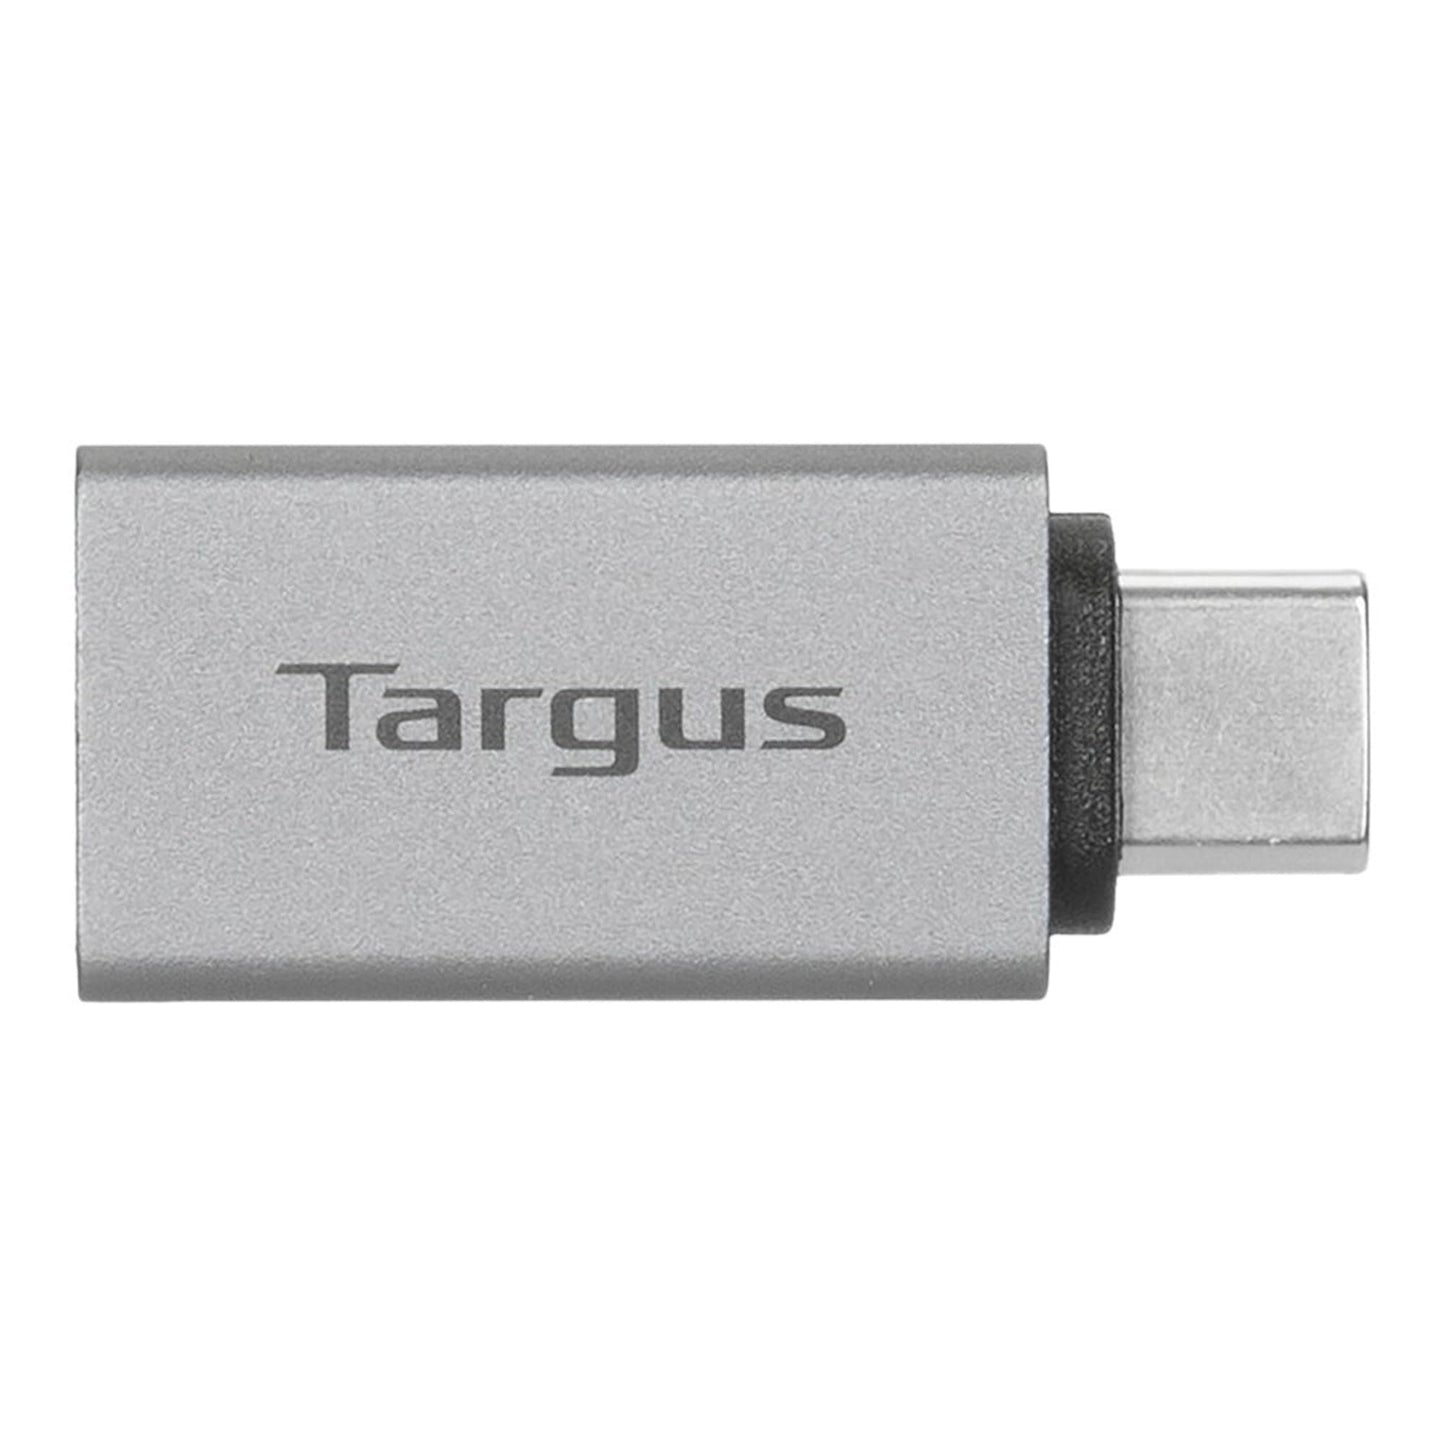 Targus USB-C to USB-A Adapter - 2pk